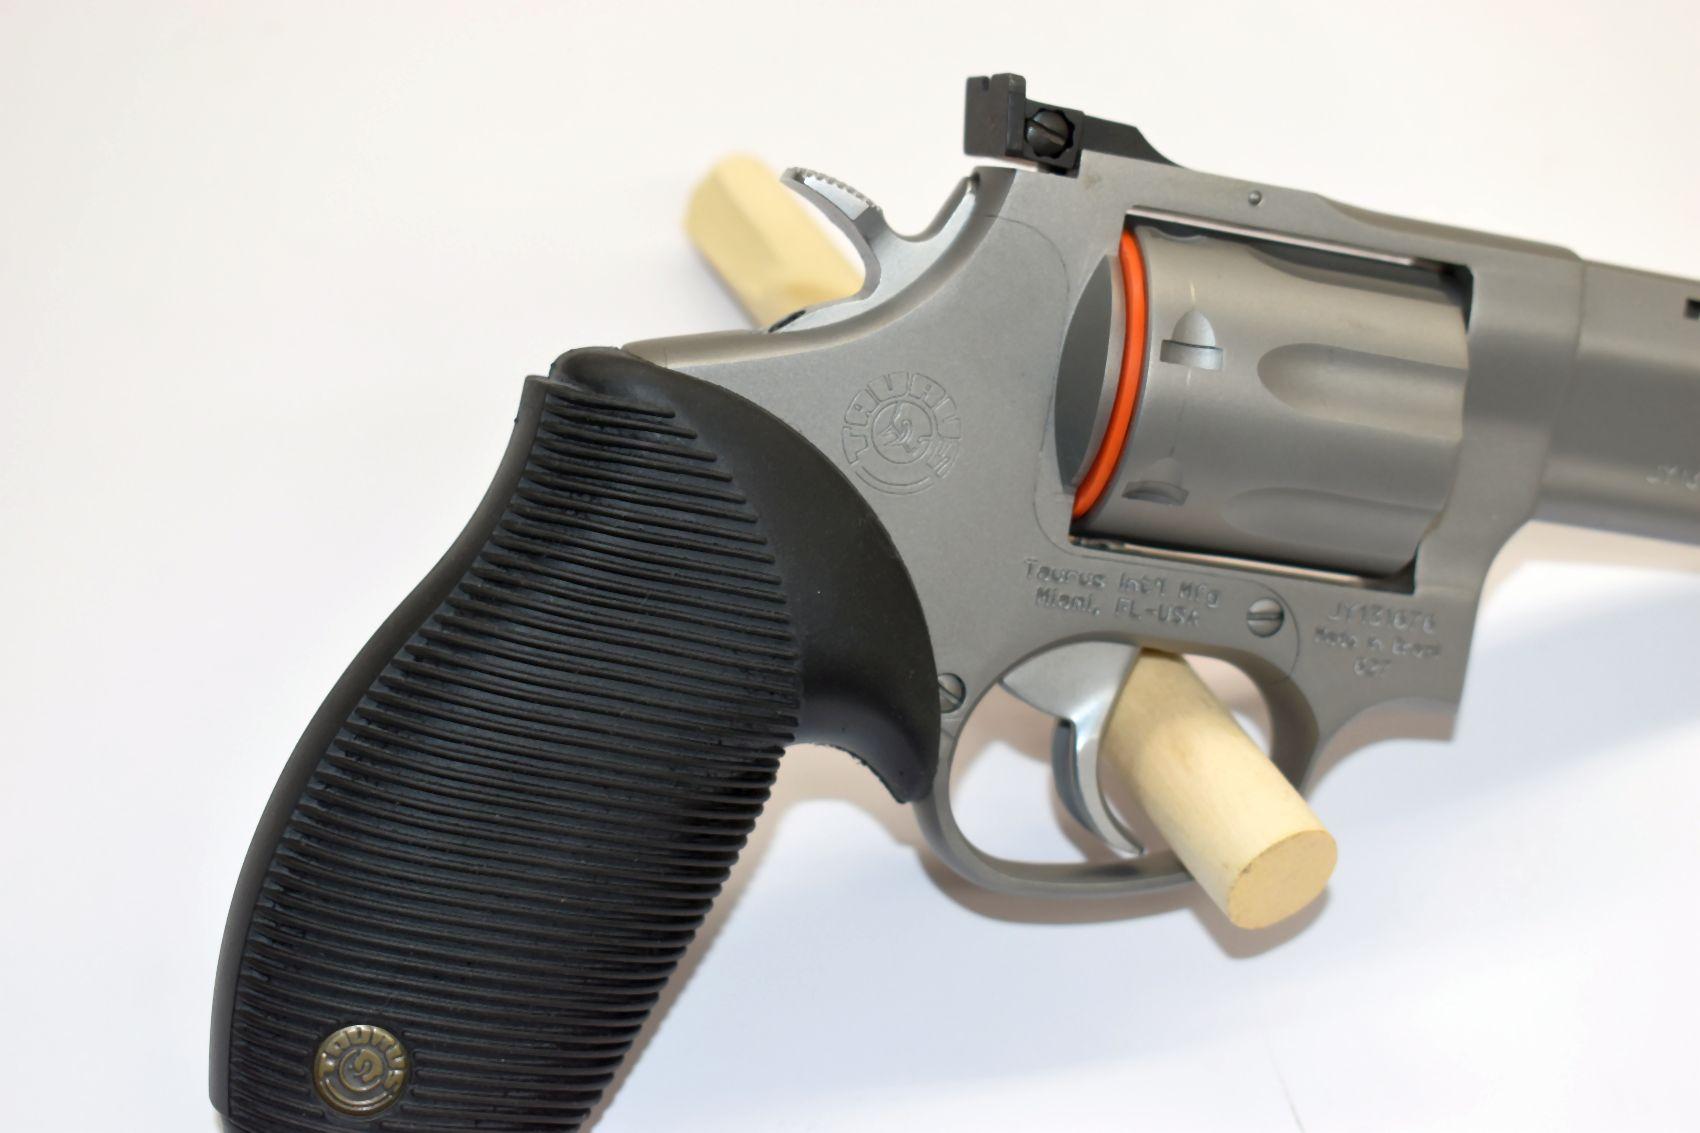 Taurus M627 Tracker, 357 Magnum, 7 Shot Revolver, 6.5'' Barrel, New In Box, SN:JY131676, Stock #9P2